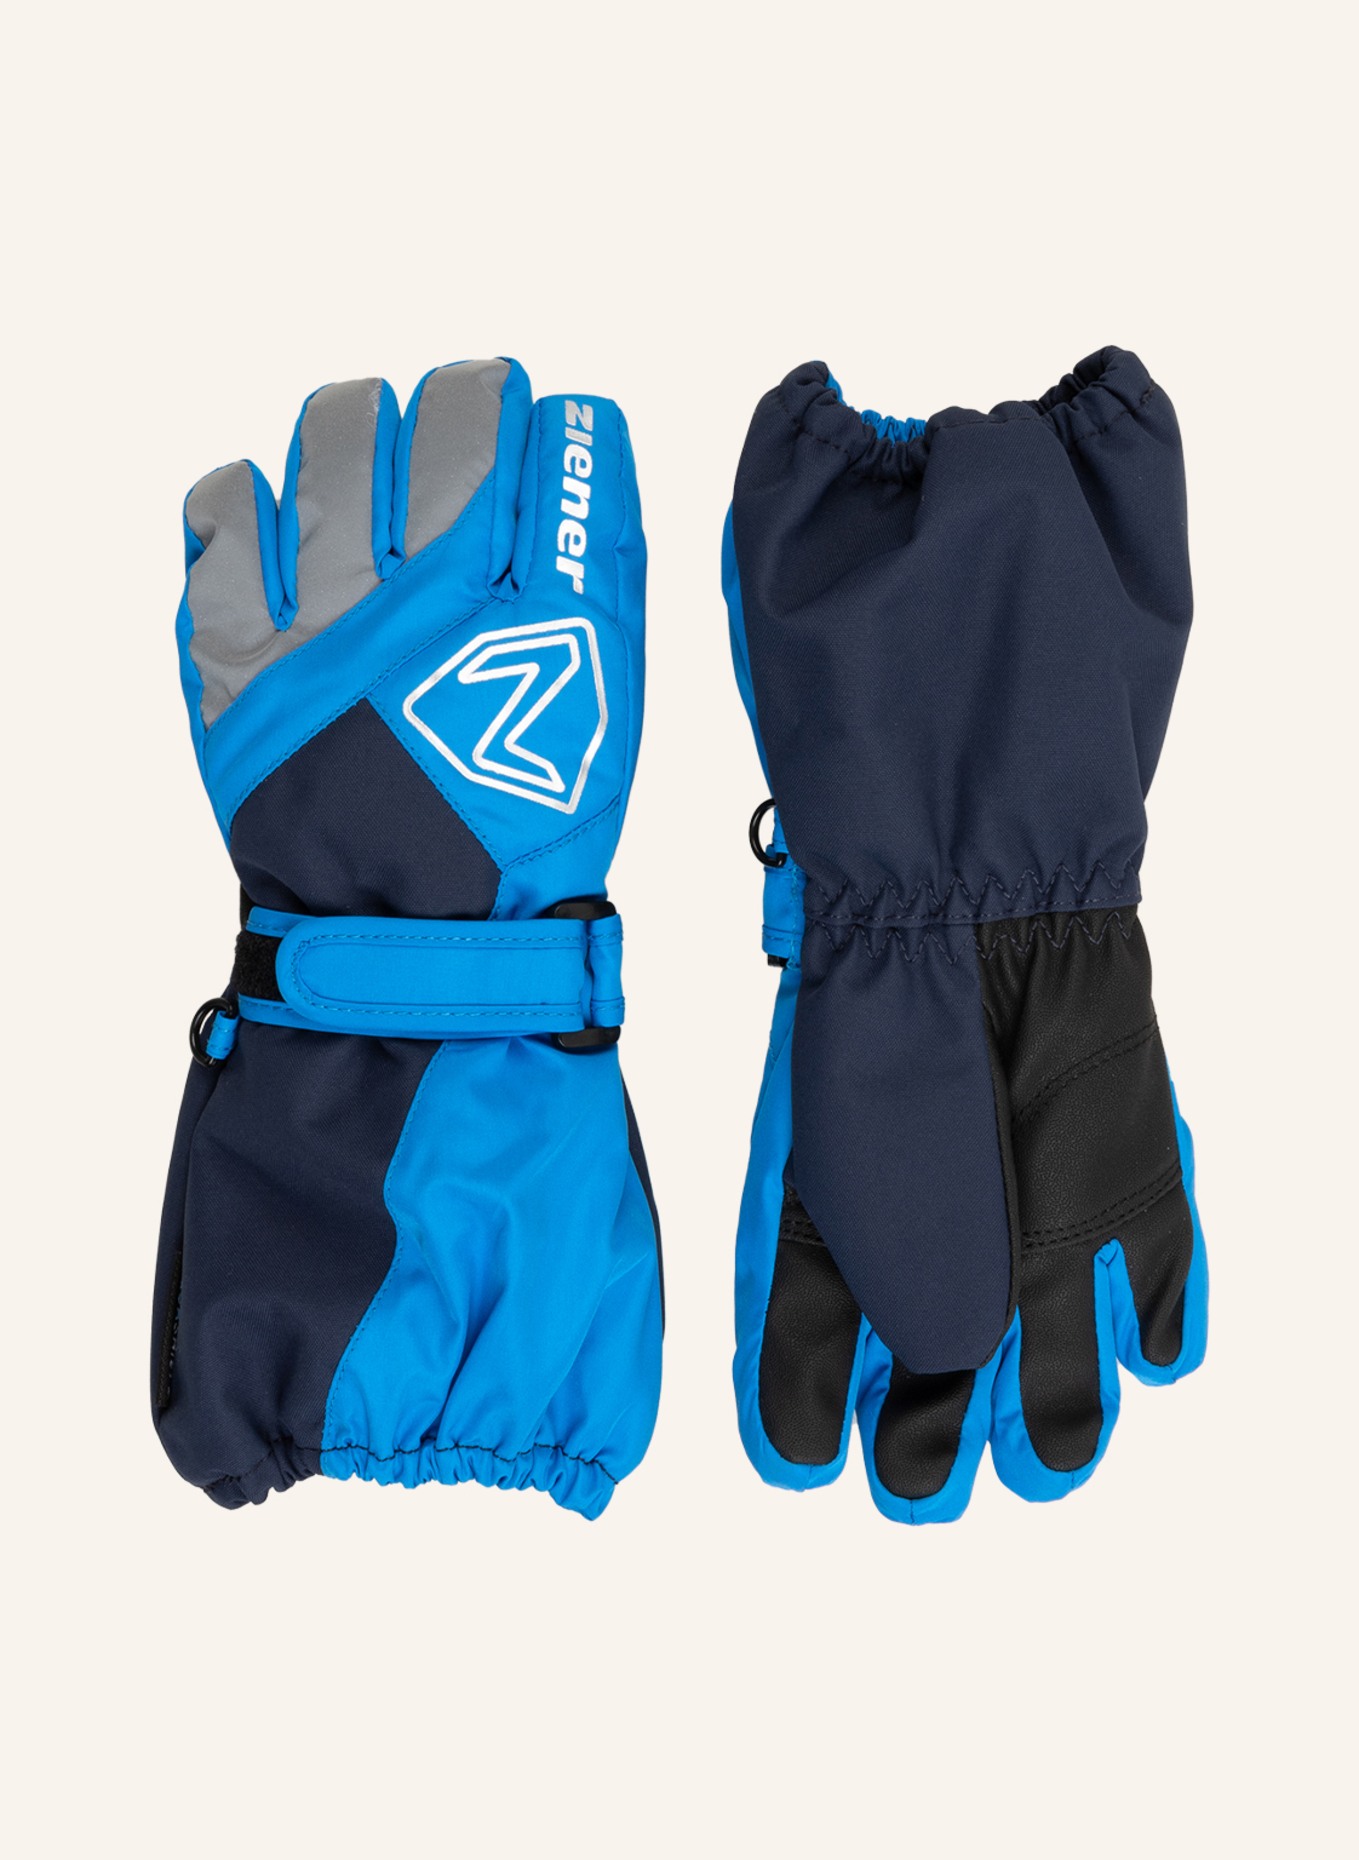 ziener Skihandschuhe LAURO AS® in dunkelblau/ blau/ grau | Handschuhe